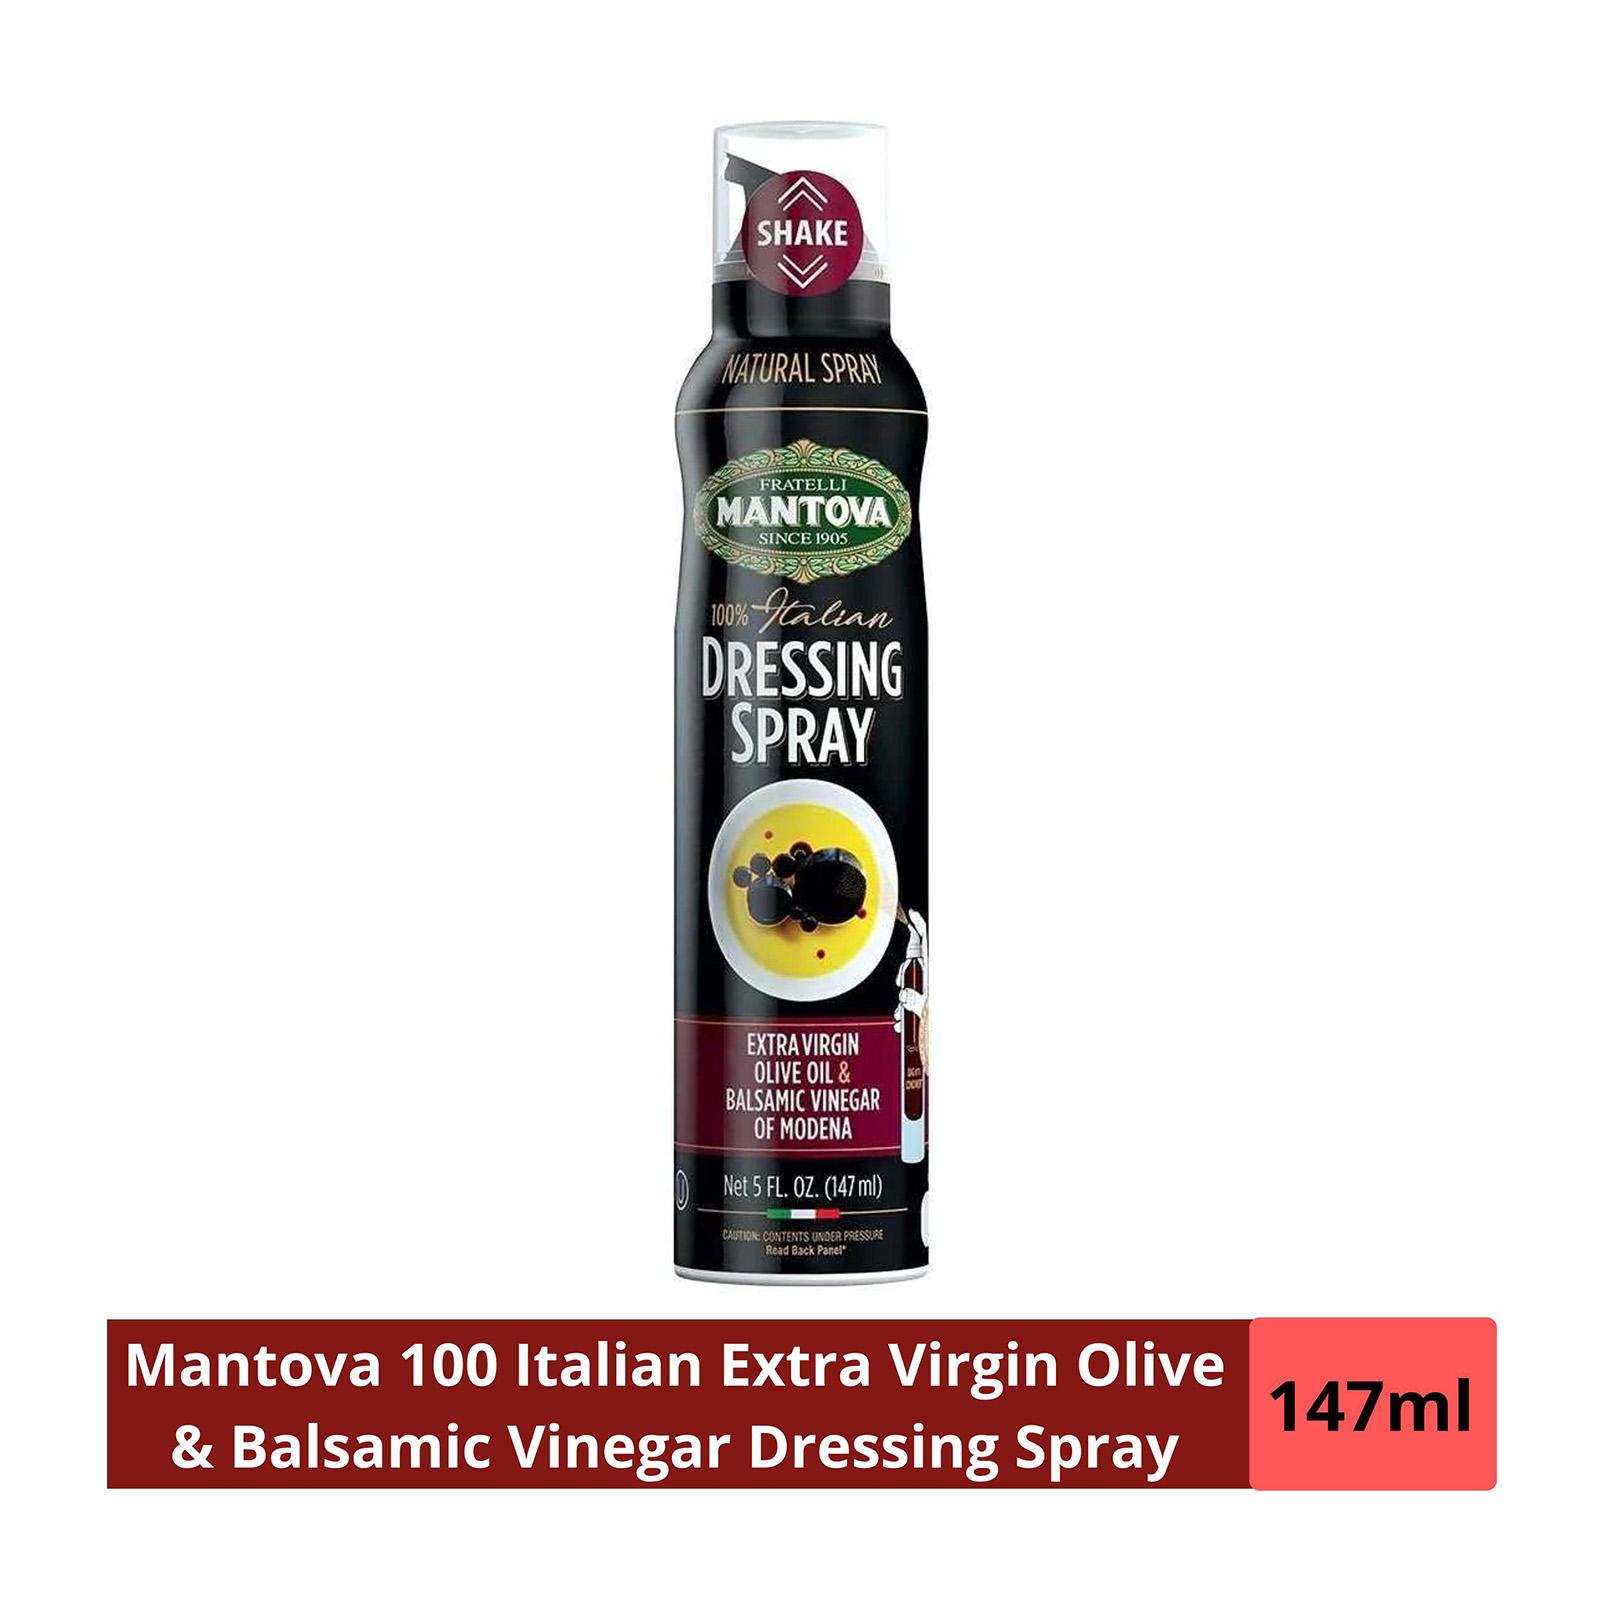 Extra Virgin Olive Oil Spray – Mantova Fine Italian Food